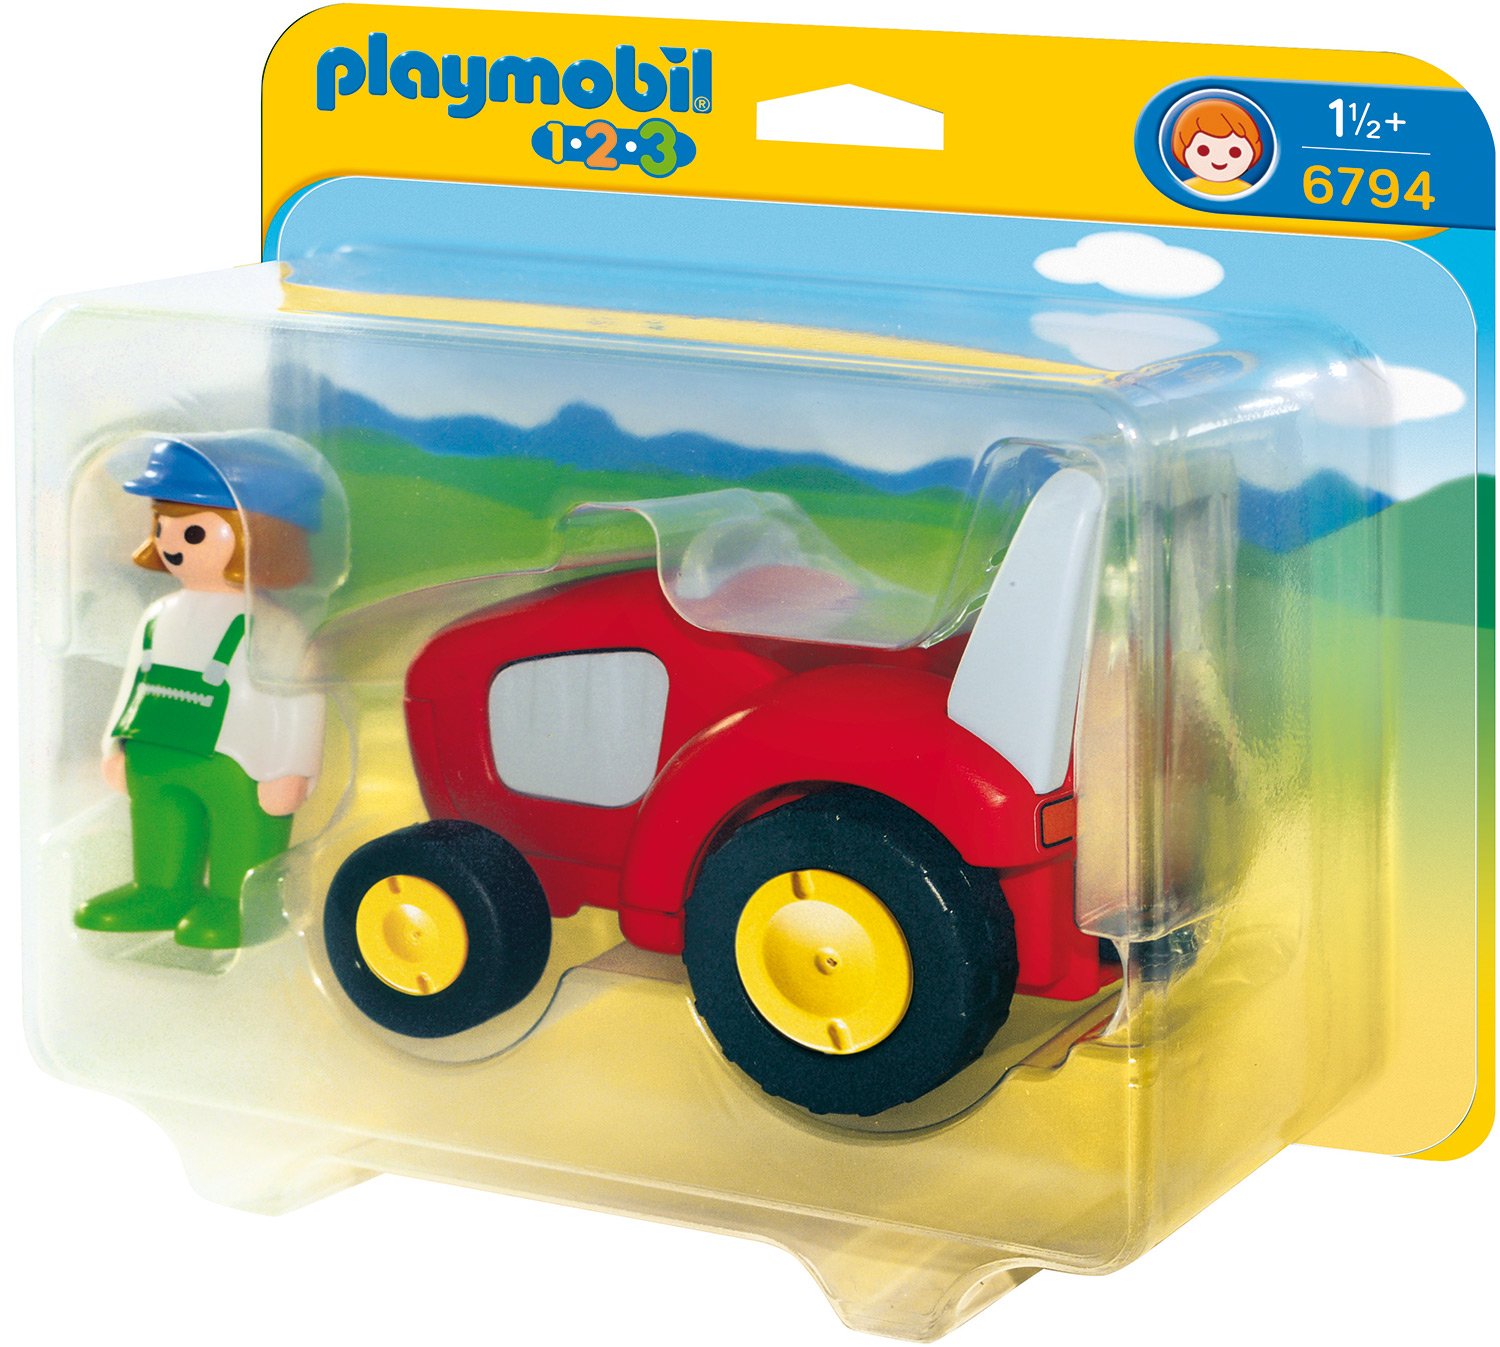 Playmobil 6794 1.2.3 Tractor